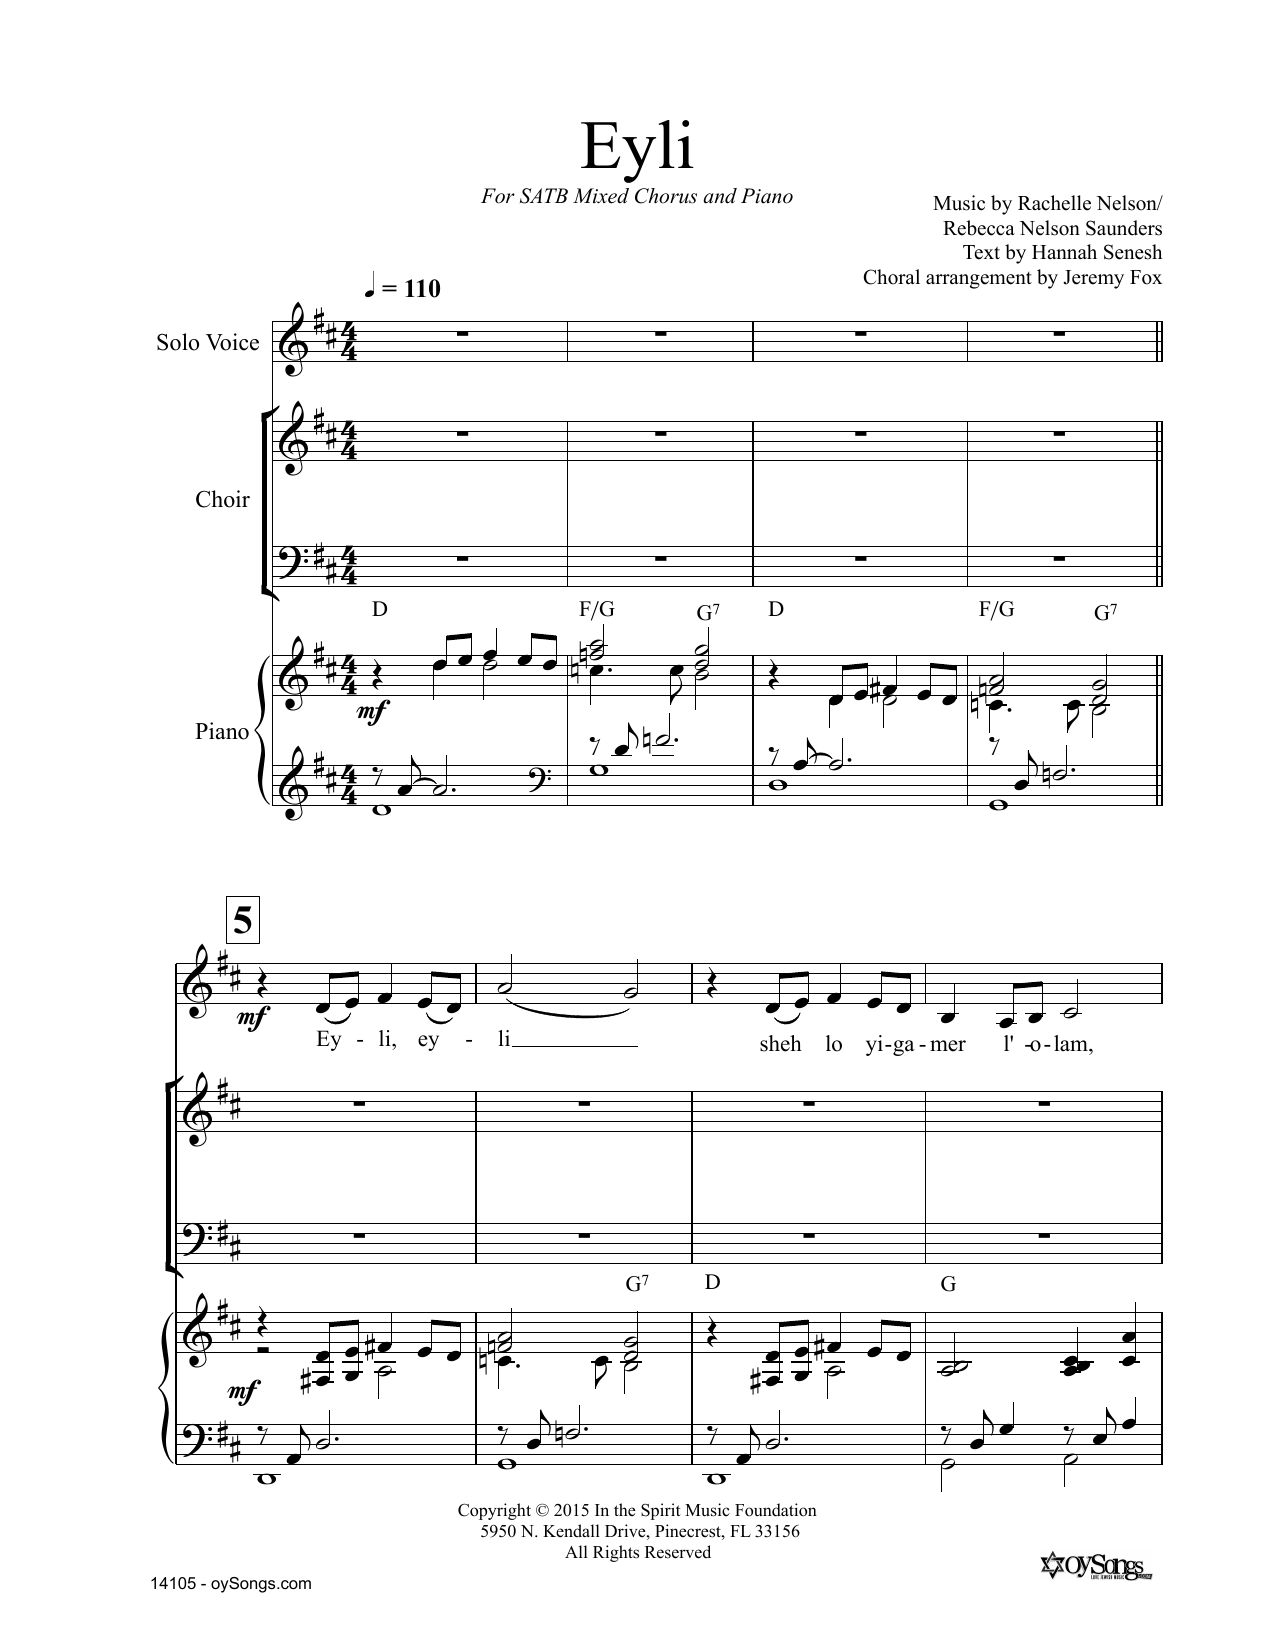 Rachelle Nelson Eyli Sheet Music Notes & Chords for SATB Choir - Download or Print PDF